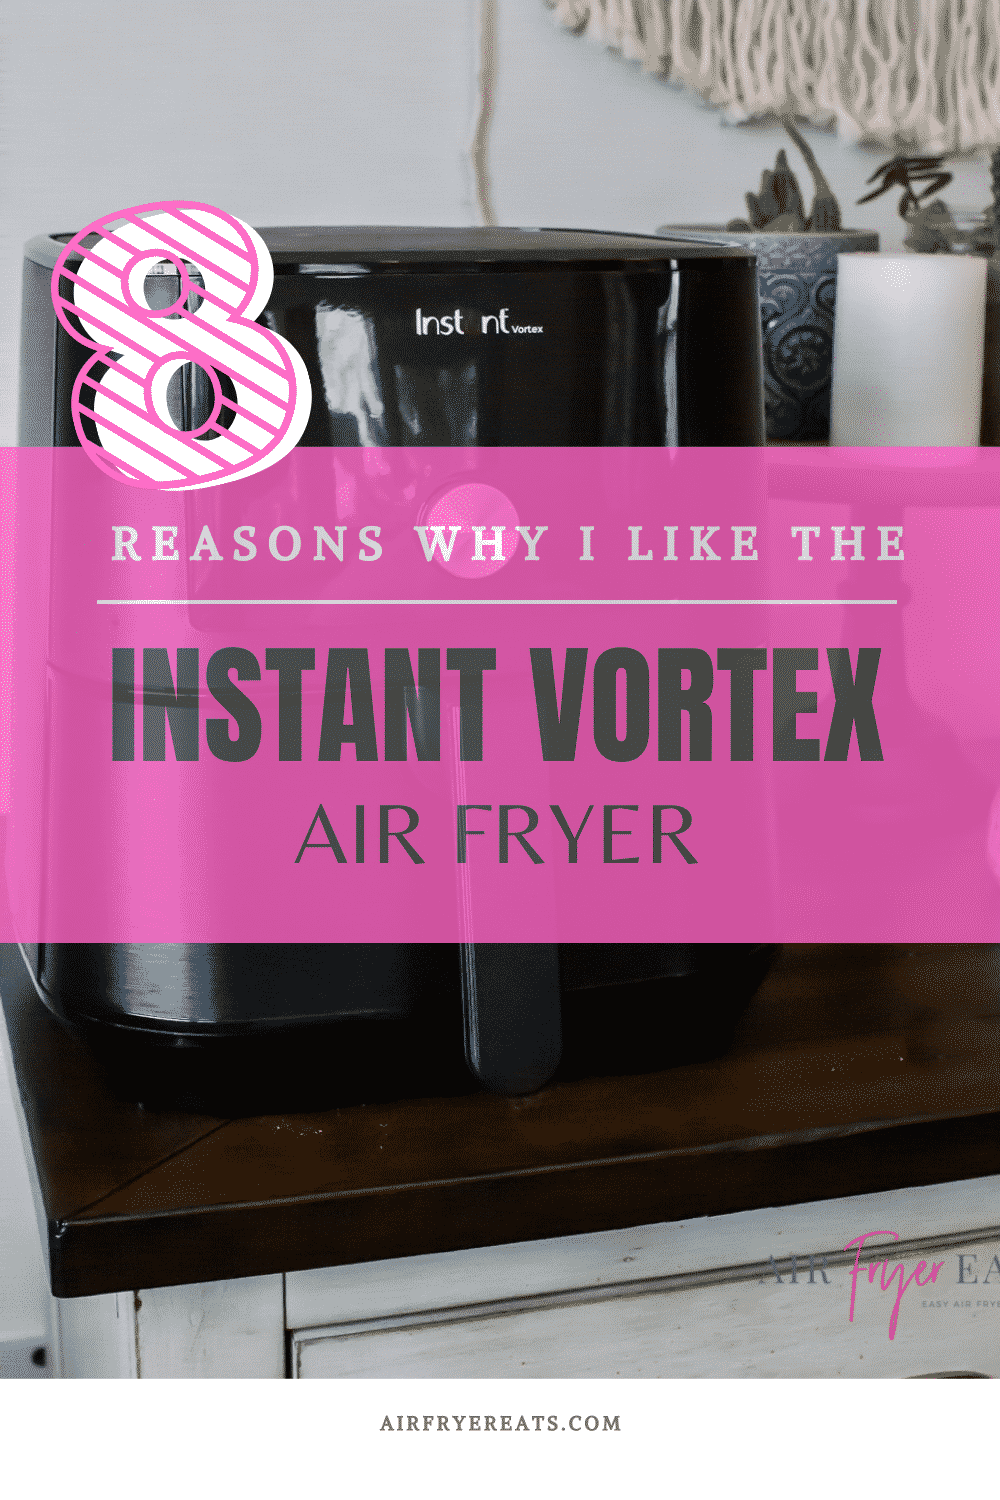 Got your eye on purchasing the Instant Vortex Air Fryer? We understand that! Check out our Instant Vortex Air Fryer Review to help you make that decision! #airfryerreviews #instantvortex via @vegetarianmamma